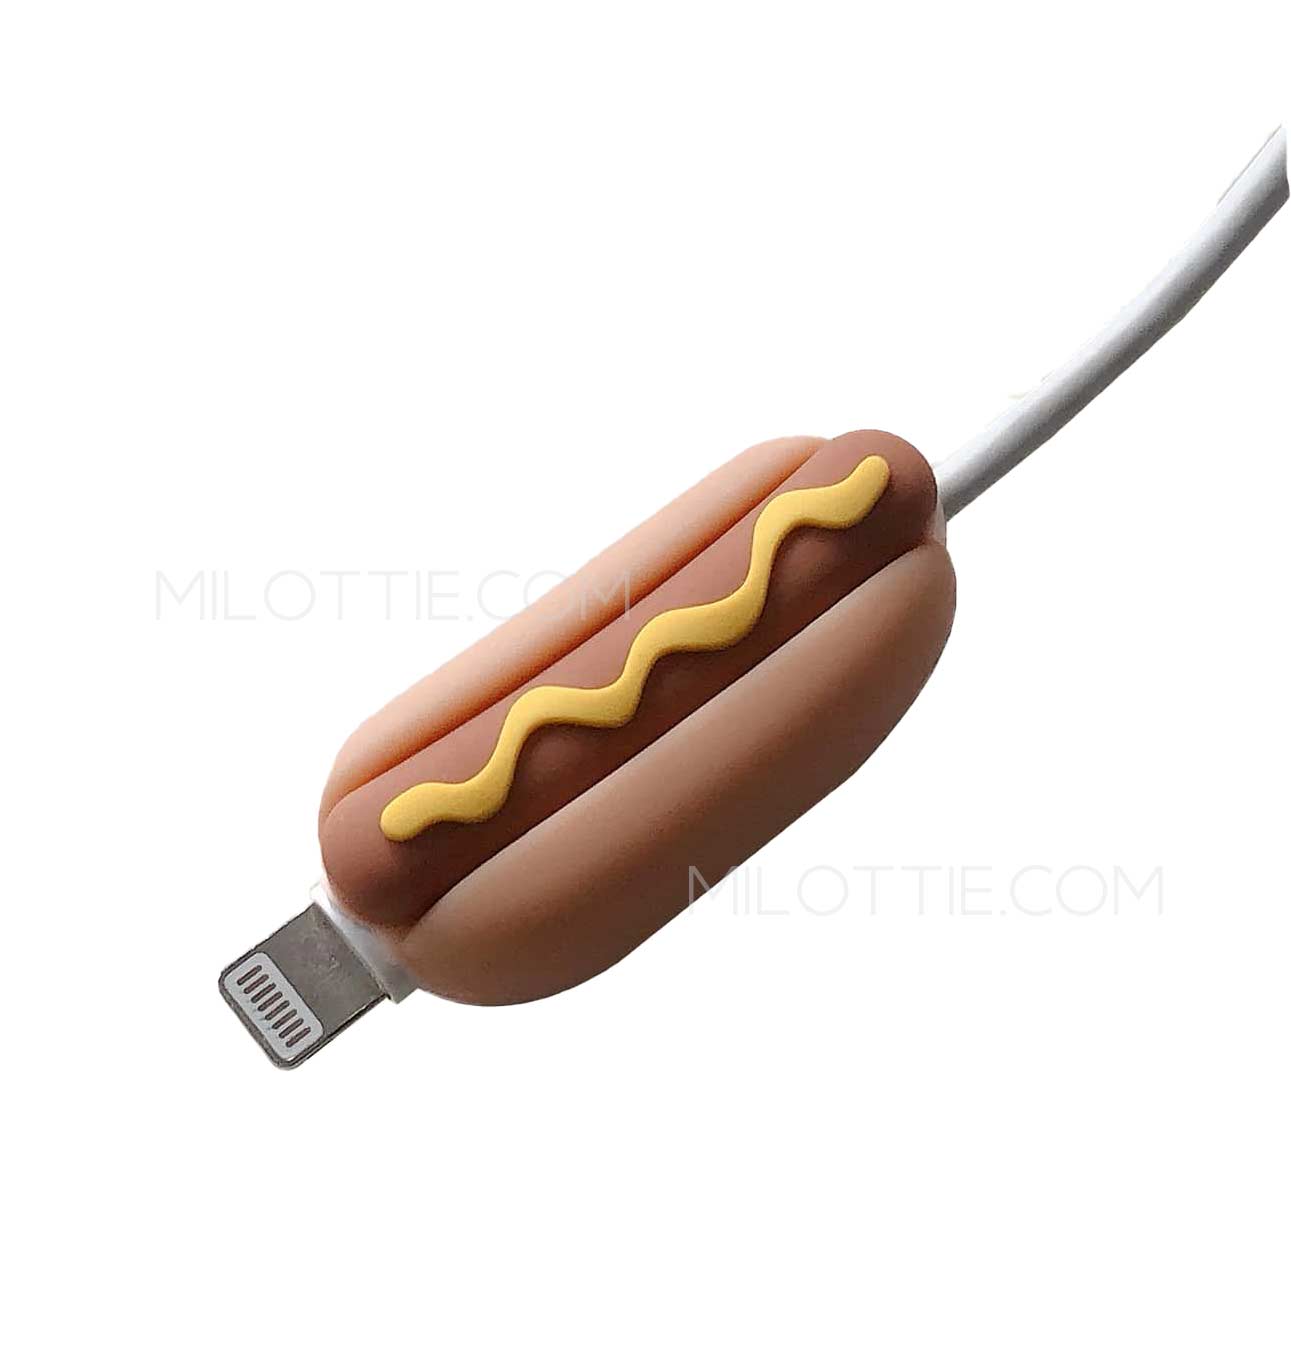 Hot dog lightning cable - MiLottie